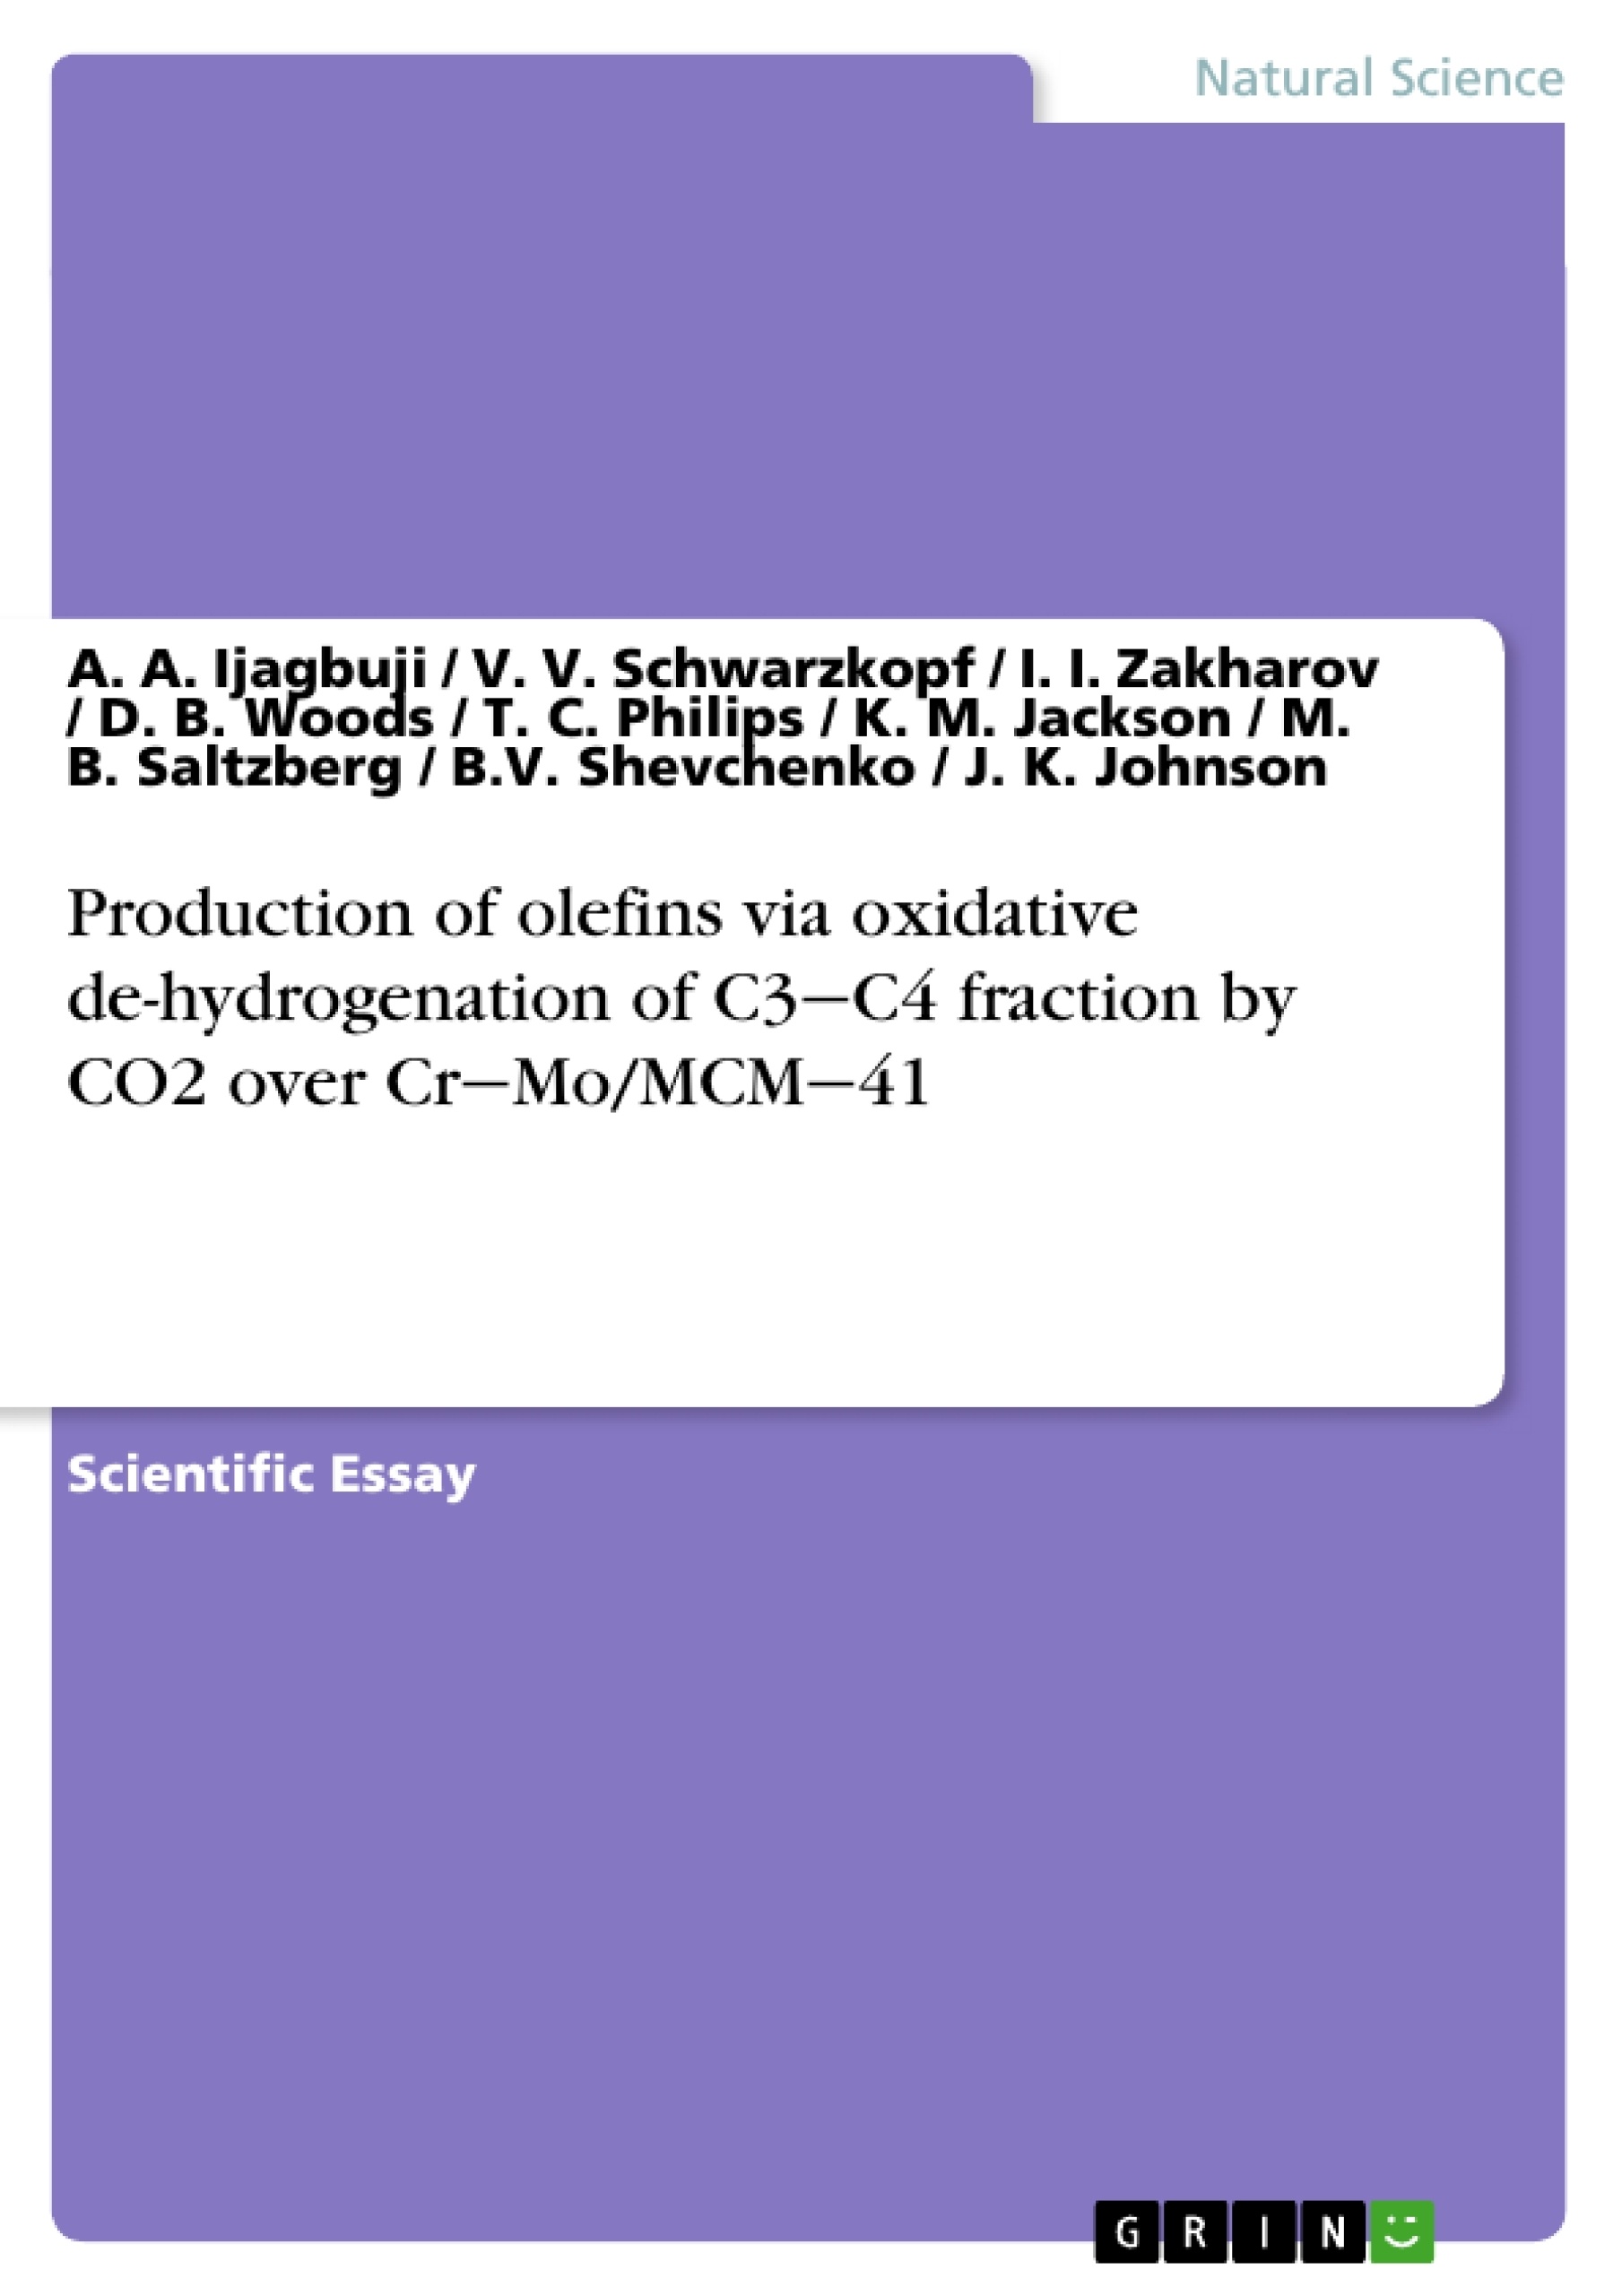 Titre: Production of olefins via oxidative de-hydrogenation of C3‒C4 fraction by CO2 over Cr‒Mo/MCM‒41